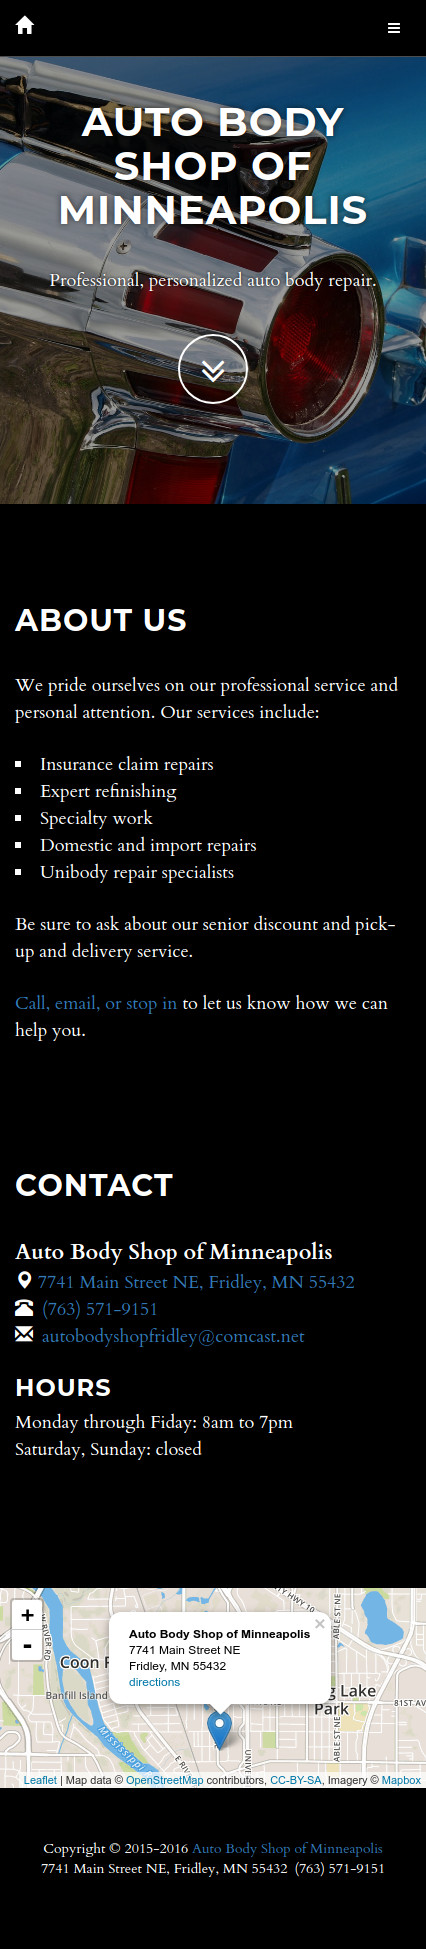 Auto Body Shop of Minneapolis website screenshot